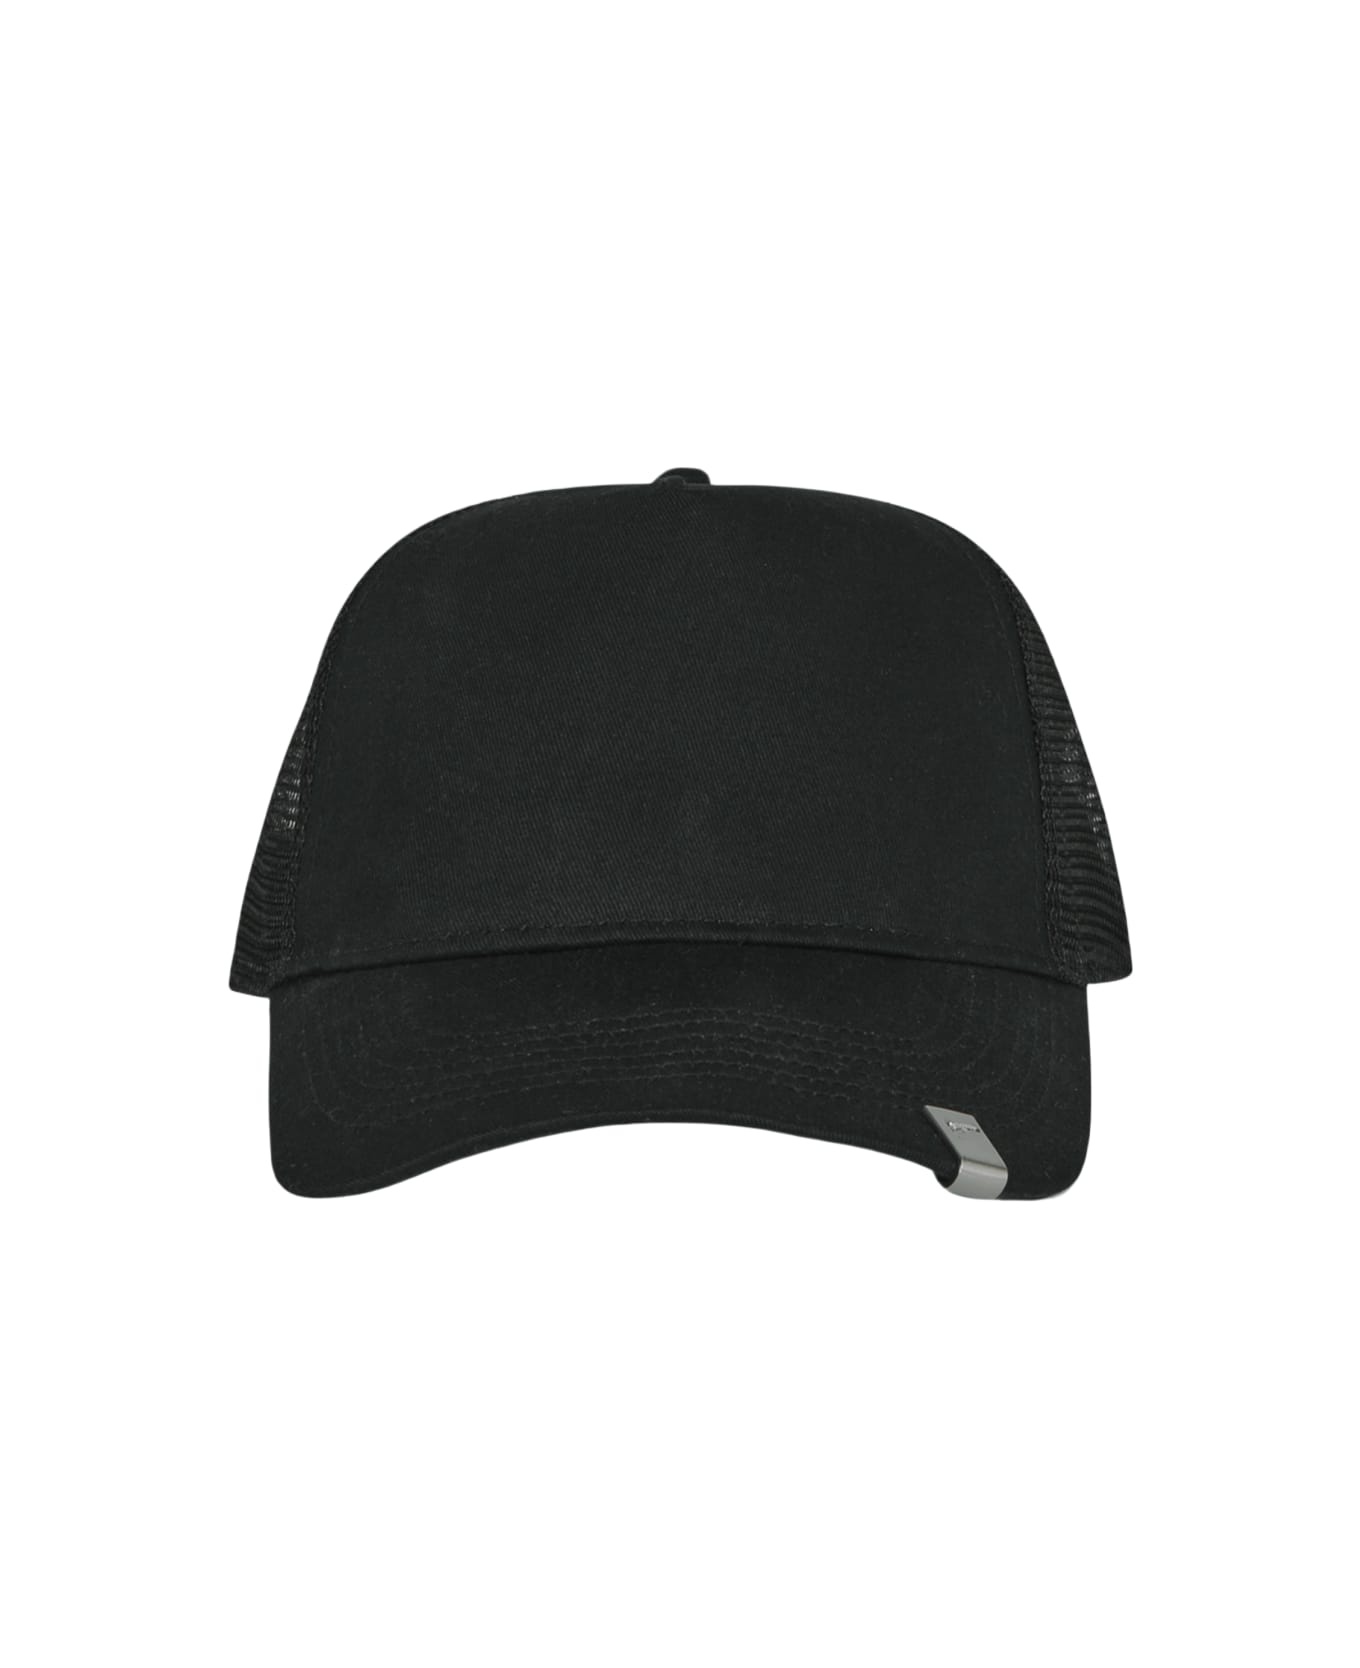 Lightercap Trucker Cap Black baseball cap with mesh at back - Lightercap Trucker Cap - 1